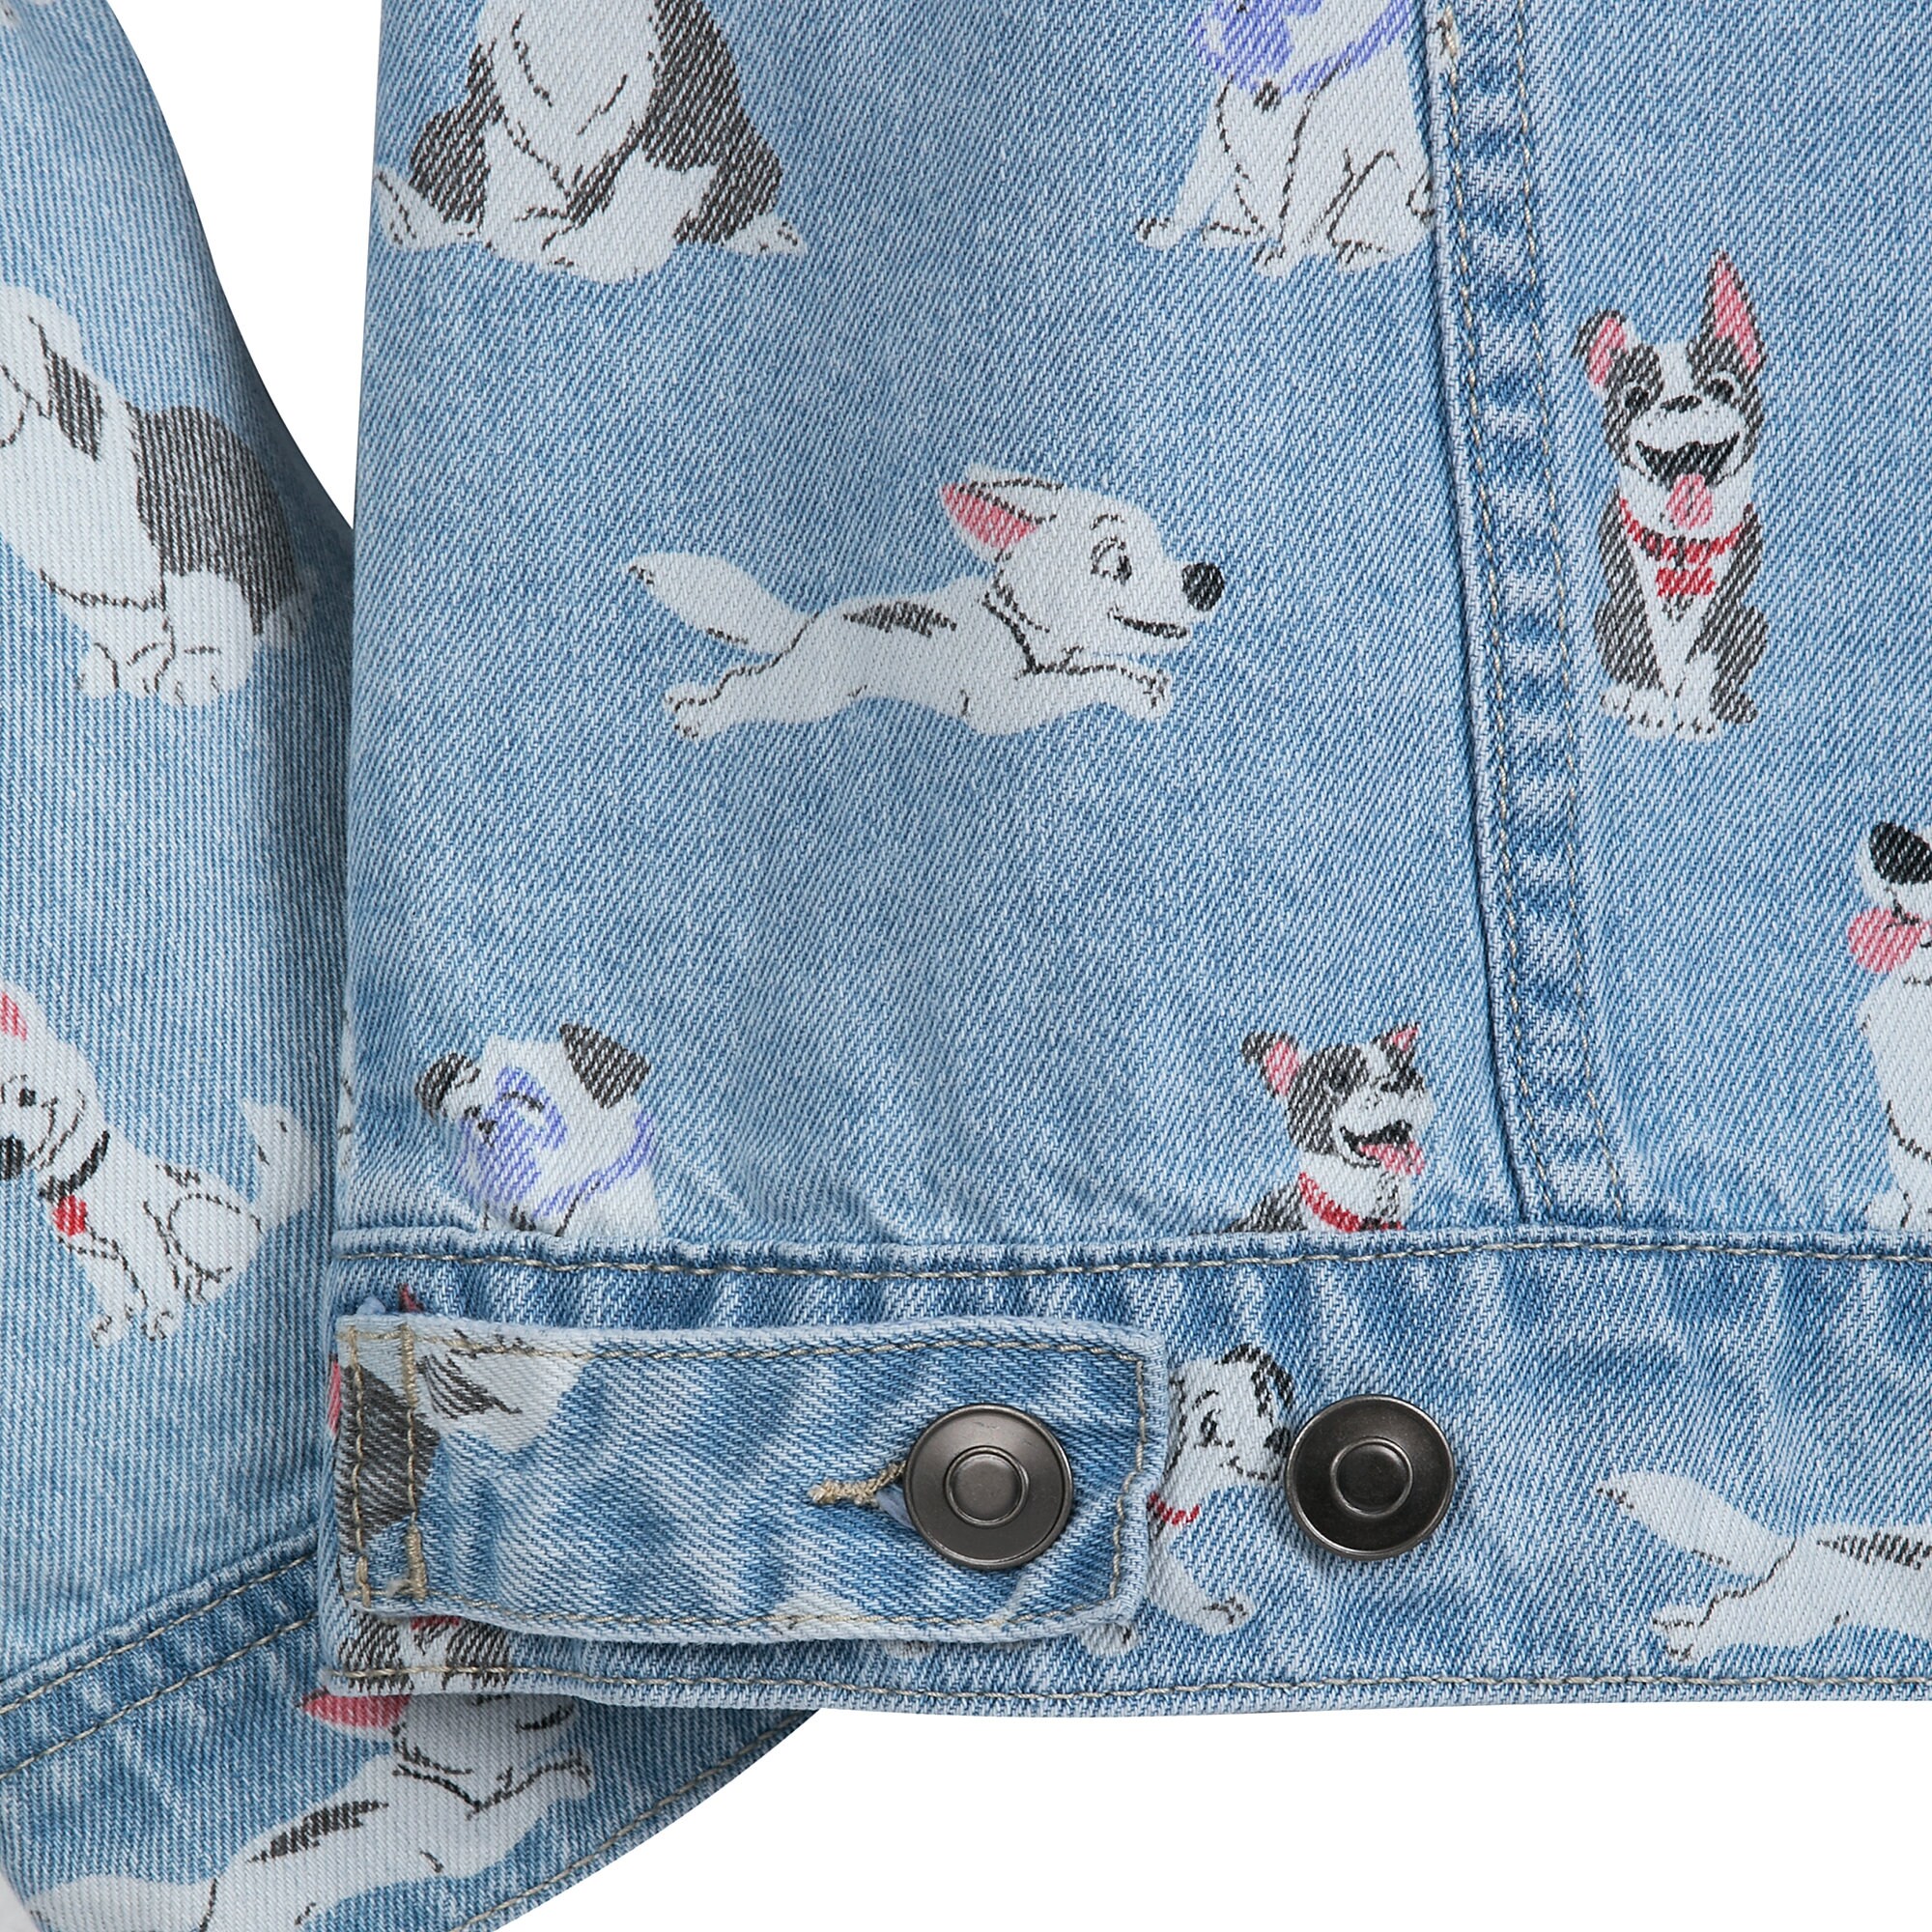 Disney Dogs Denim Jacket for Women Oh My Disney here now